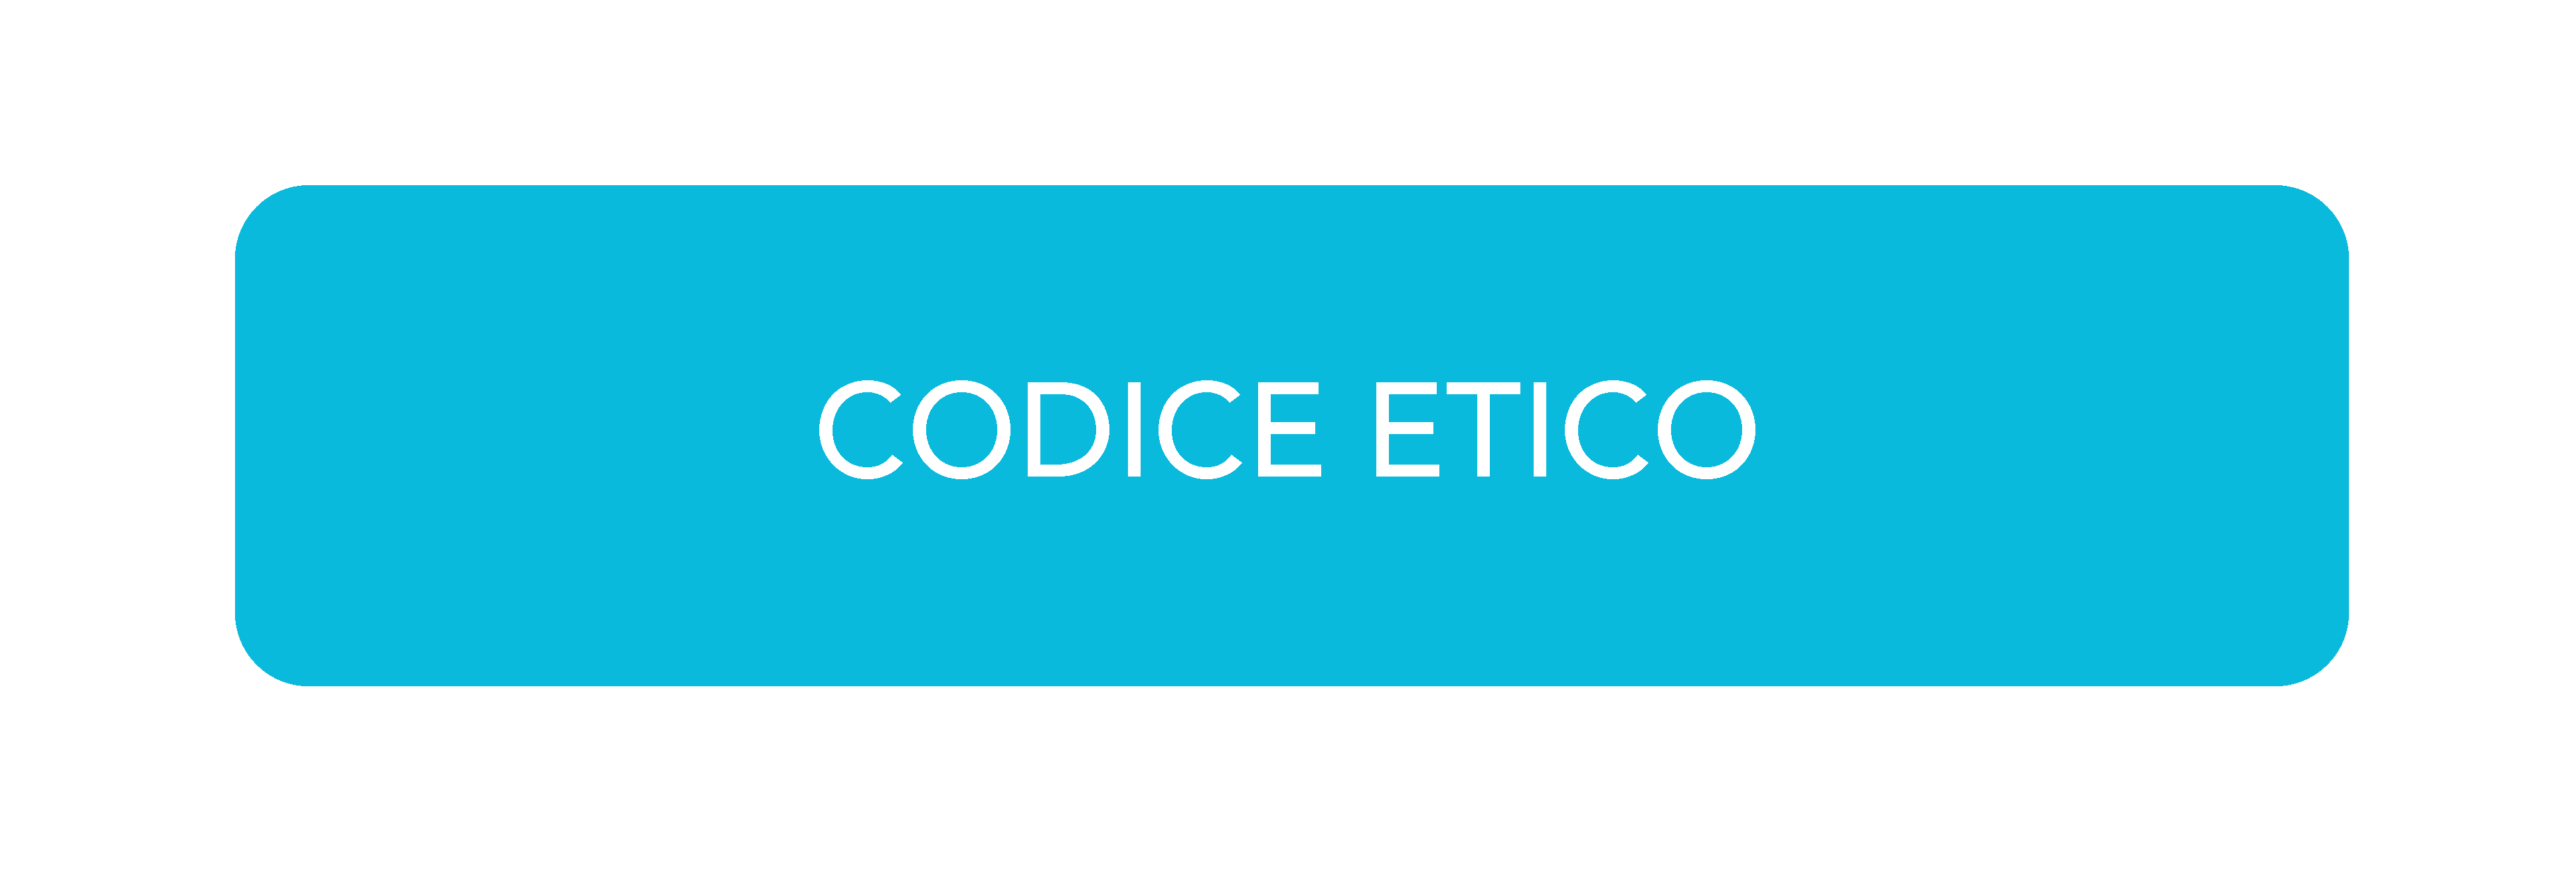 CODICE ETICO.png